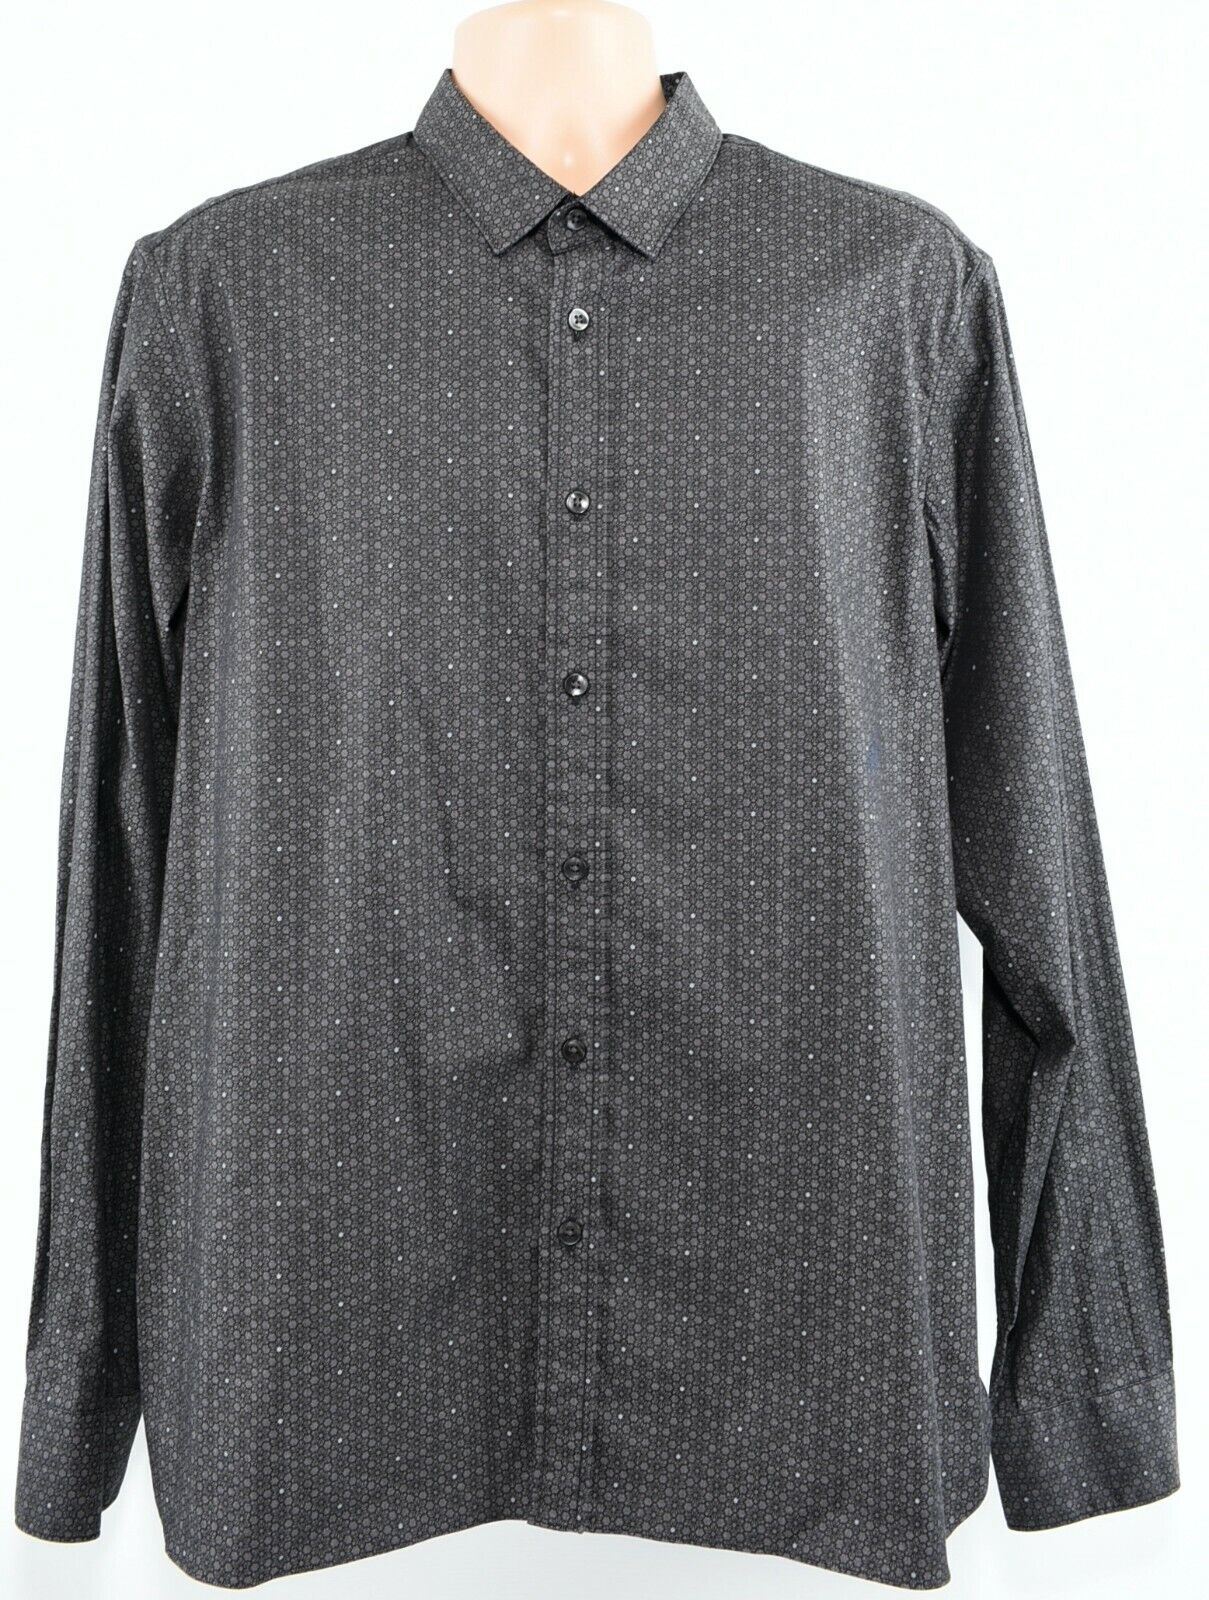 ZZEGNA Men's Long Sleeve Shirt, Black/Grey Floral Print, collar 17" slim fit